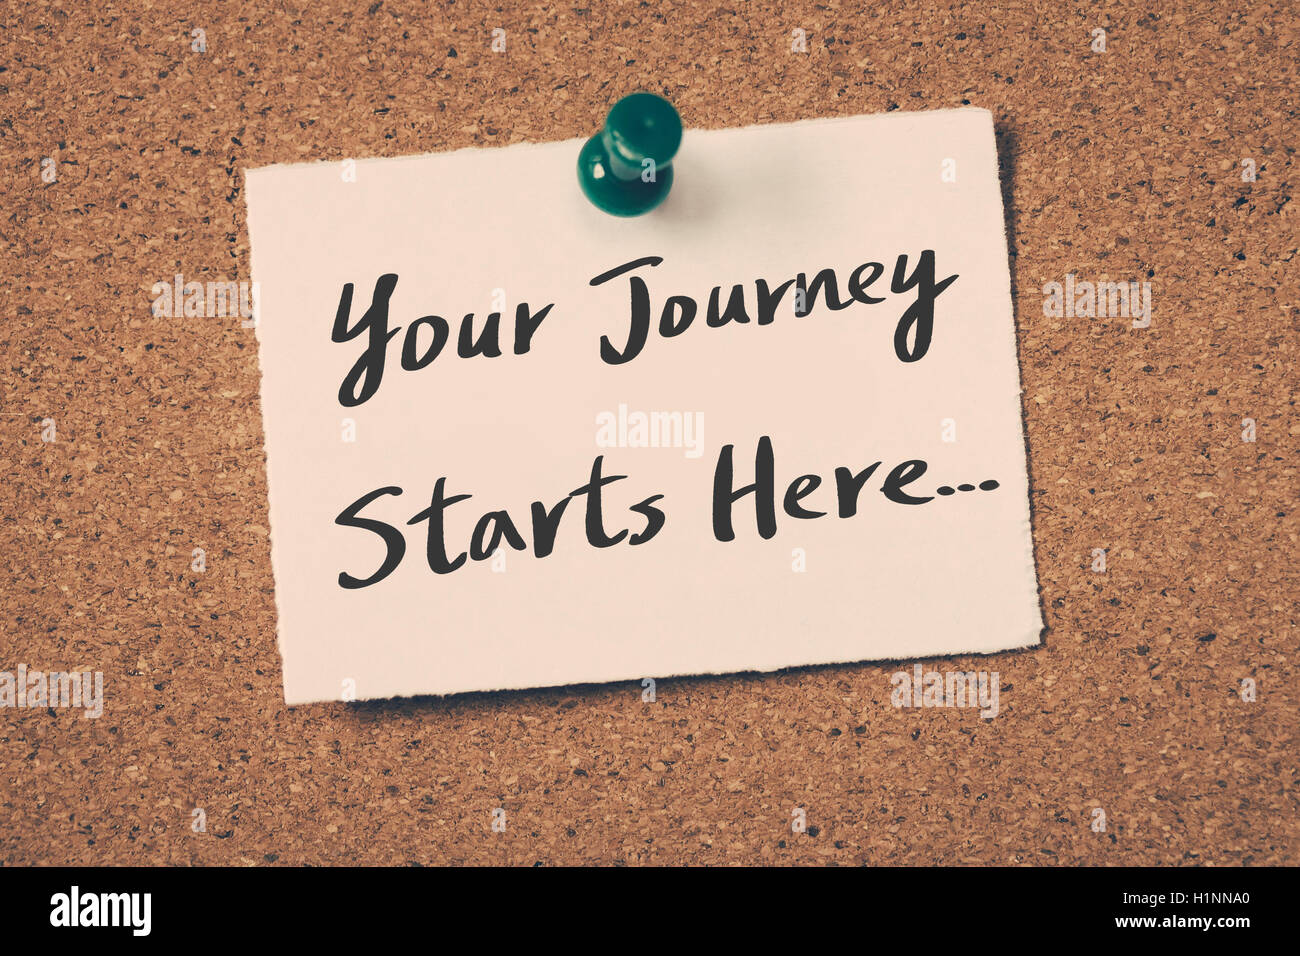 The problem starts here. Путешествие начинается здесь. The Journey starts here. Start a Journey. Start your Journey.